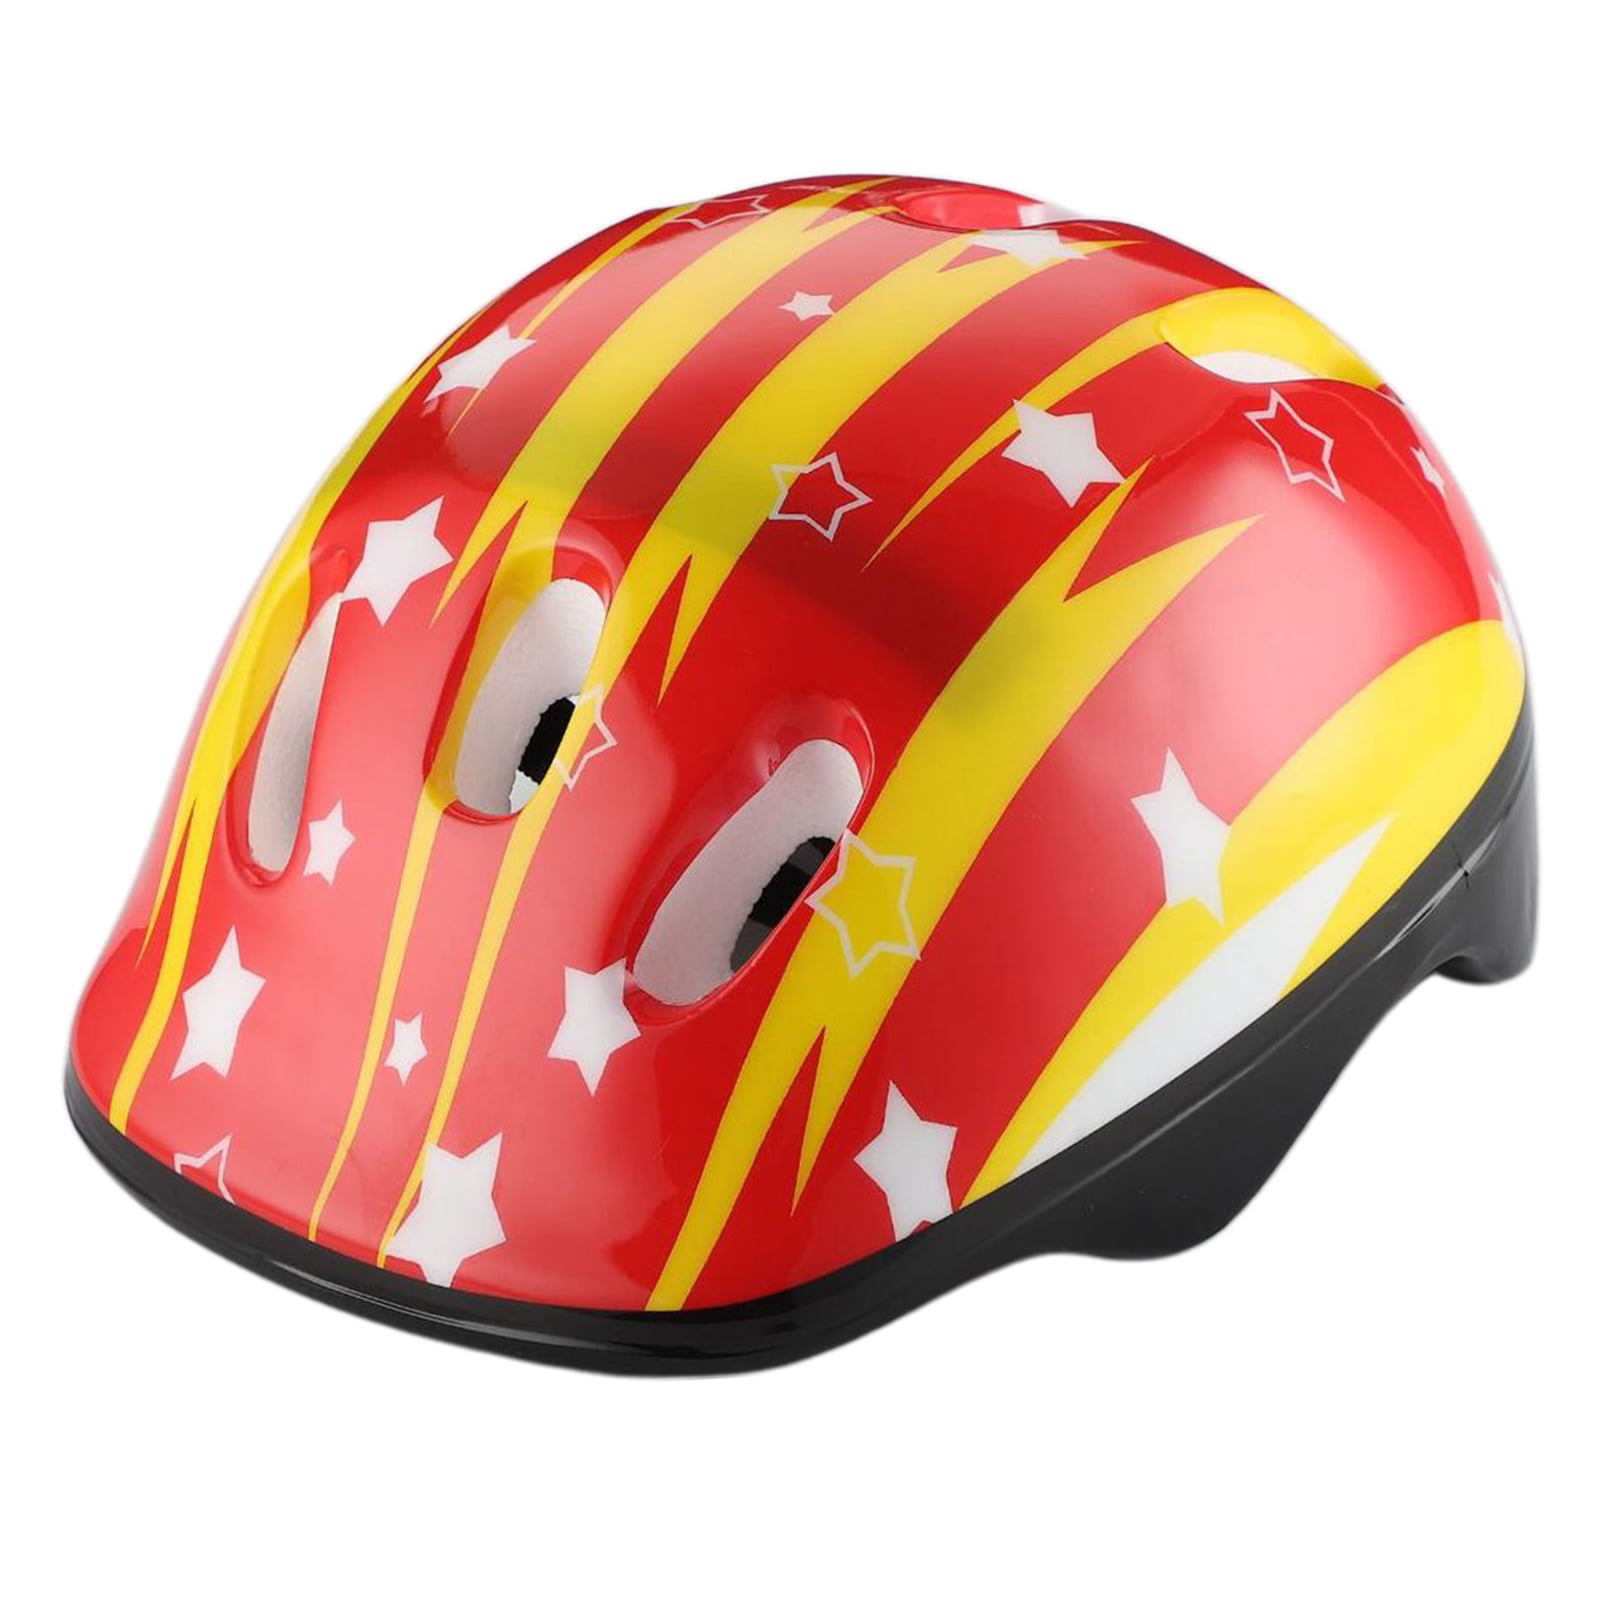 Boys Girls Kids Safety Helmet for Bike Scooter Bicycle Skate Board Helmet P0Q6 